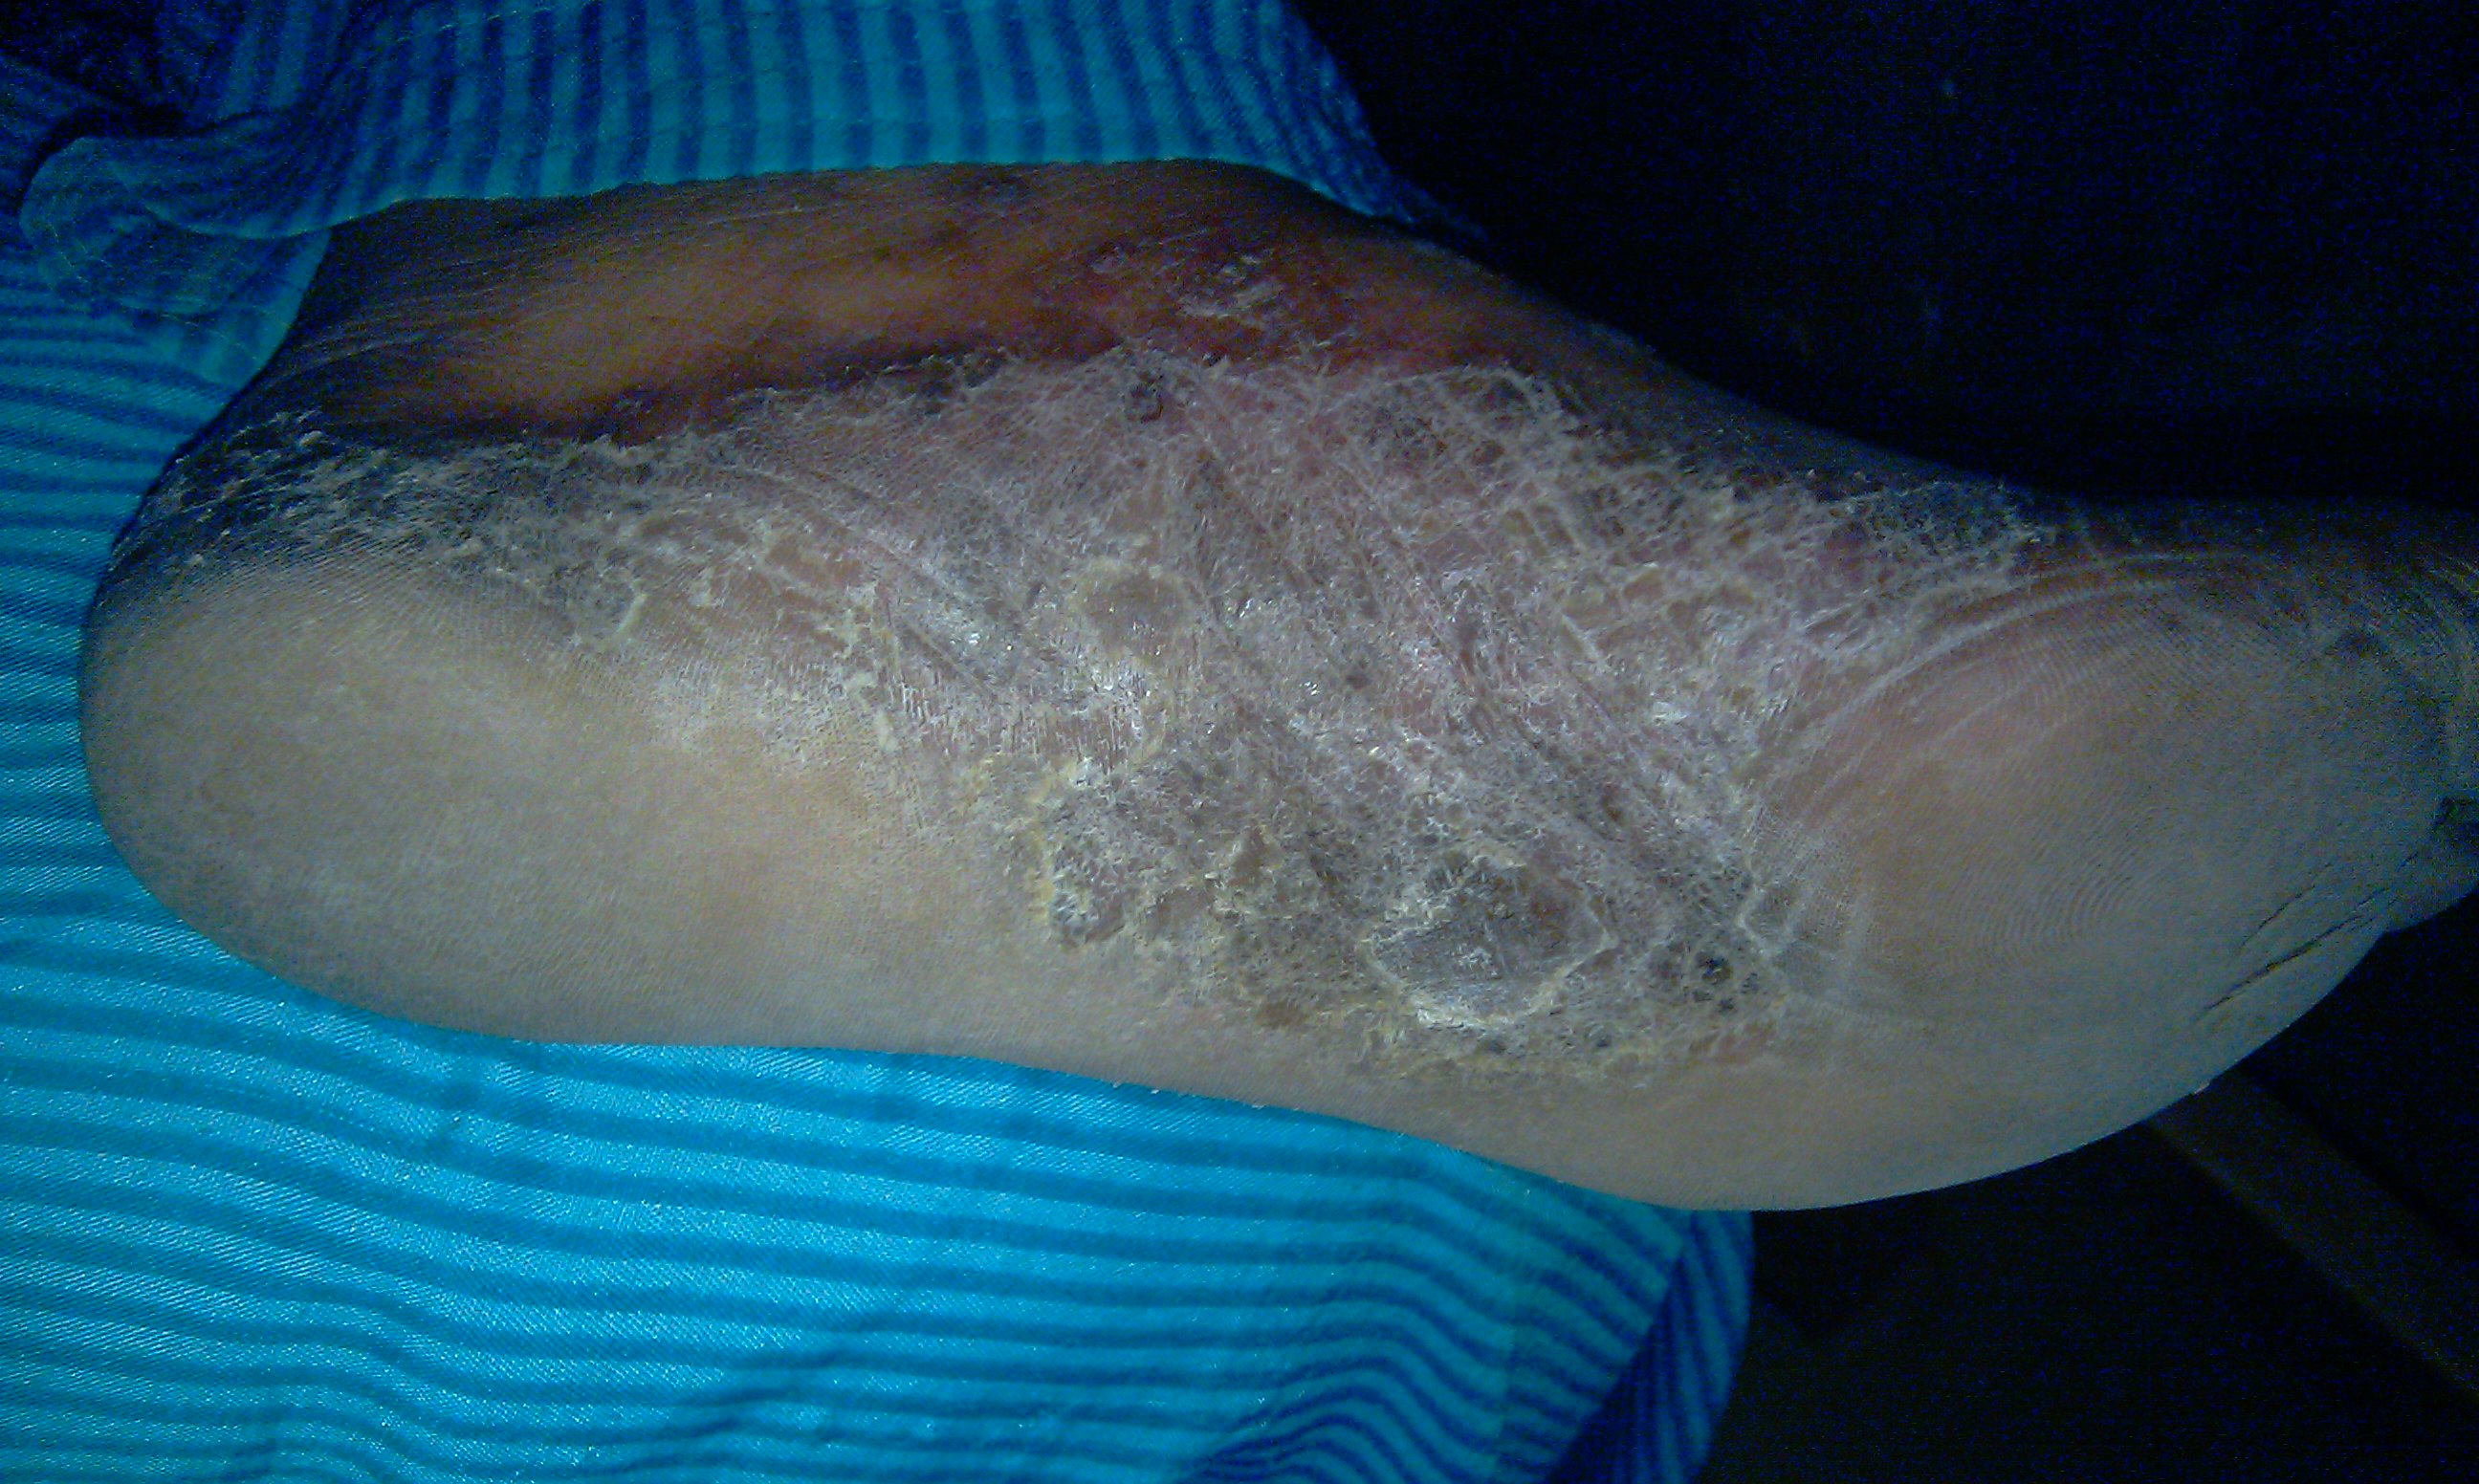 elephant skin disease #9